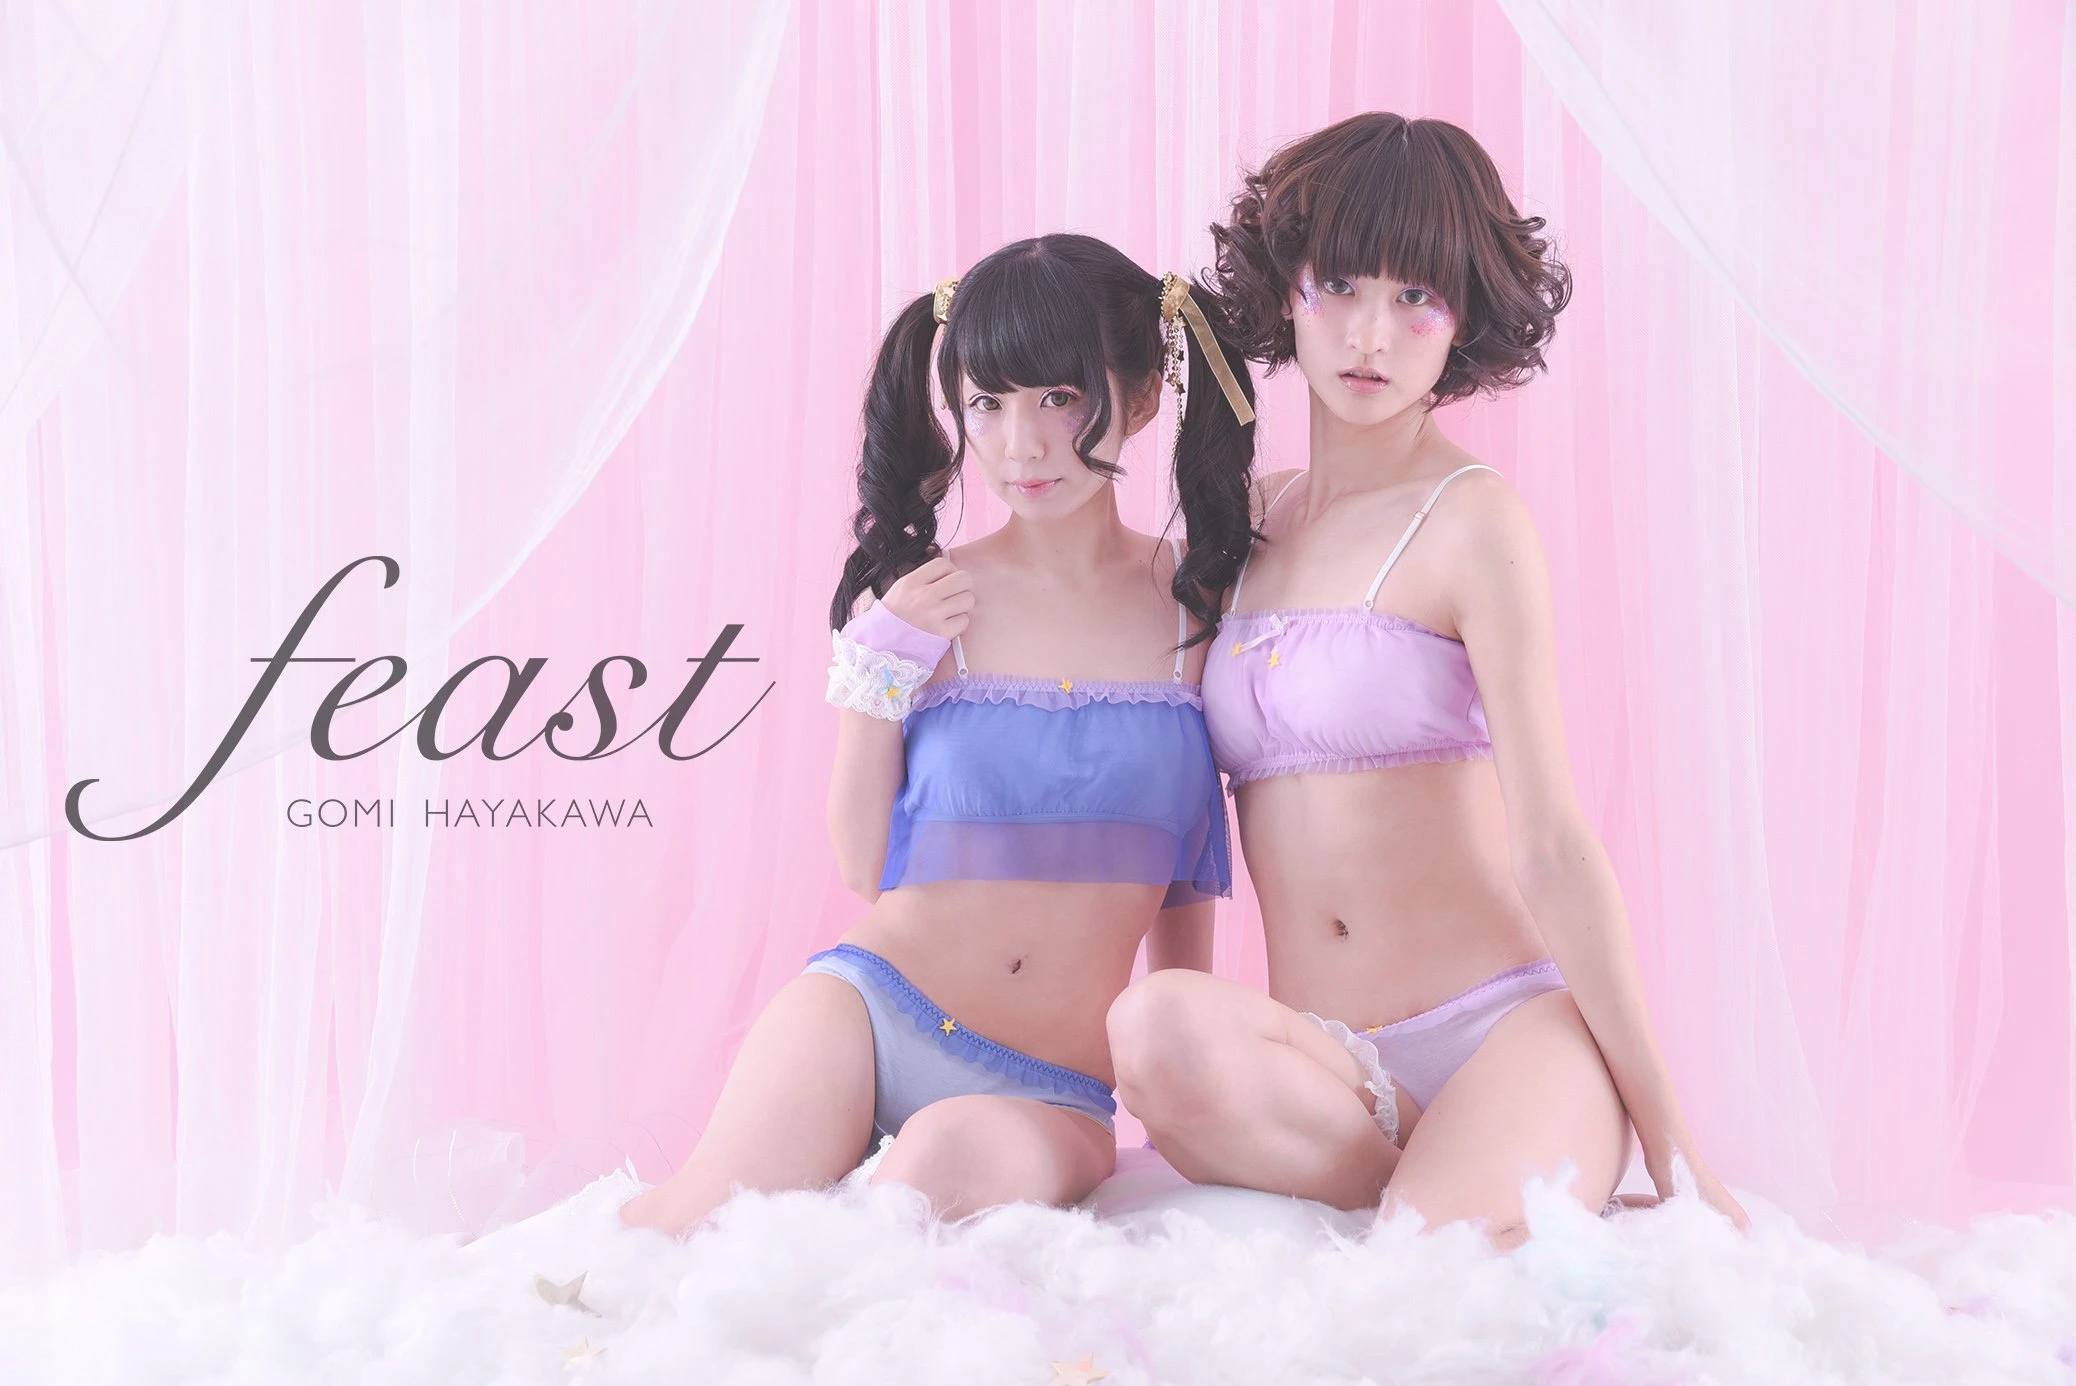 「feast by GOMI HAYAKAWA」